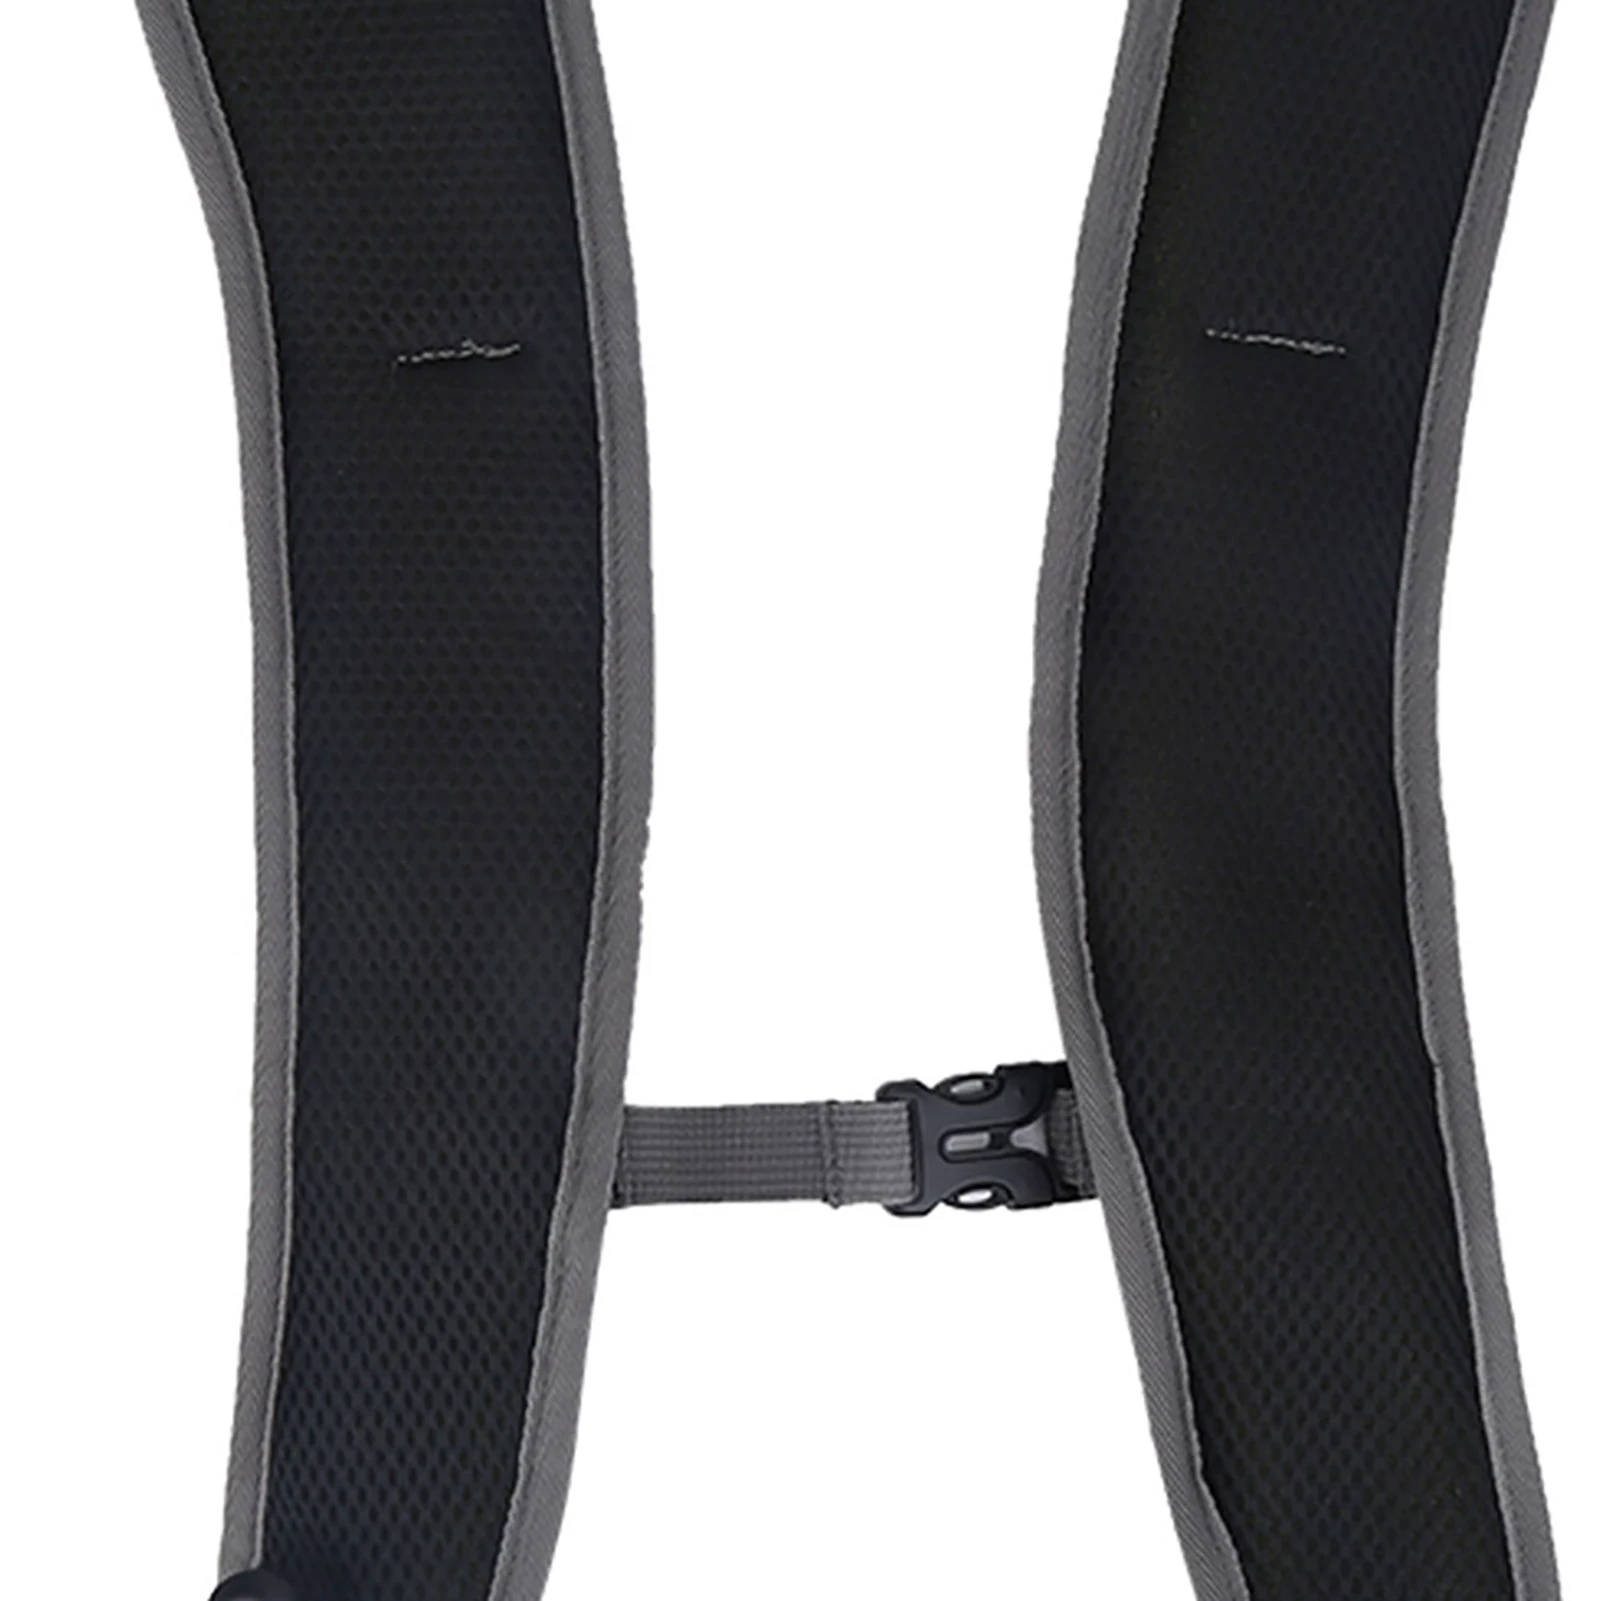 Nylon Durable Backpack Shoulder Adjustable Straps Belt Repair Parts Accessory (Black+Gray)